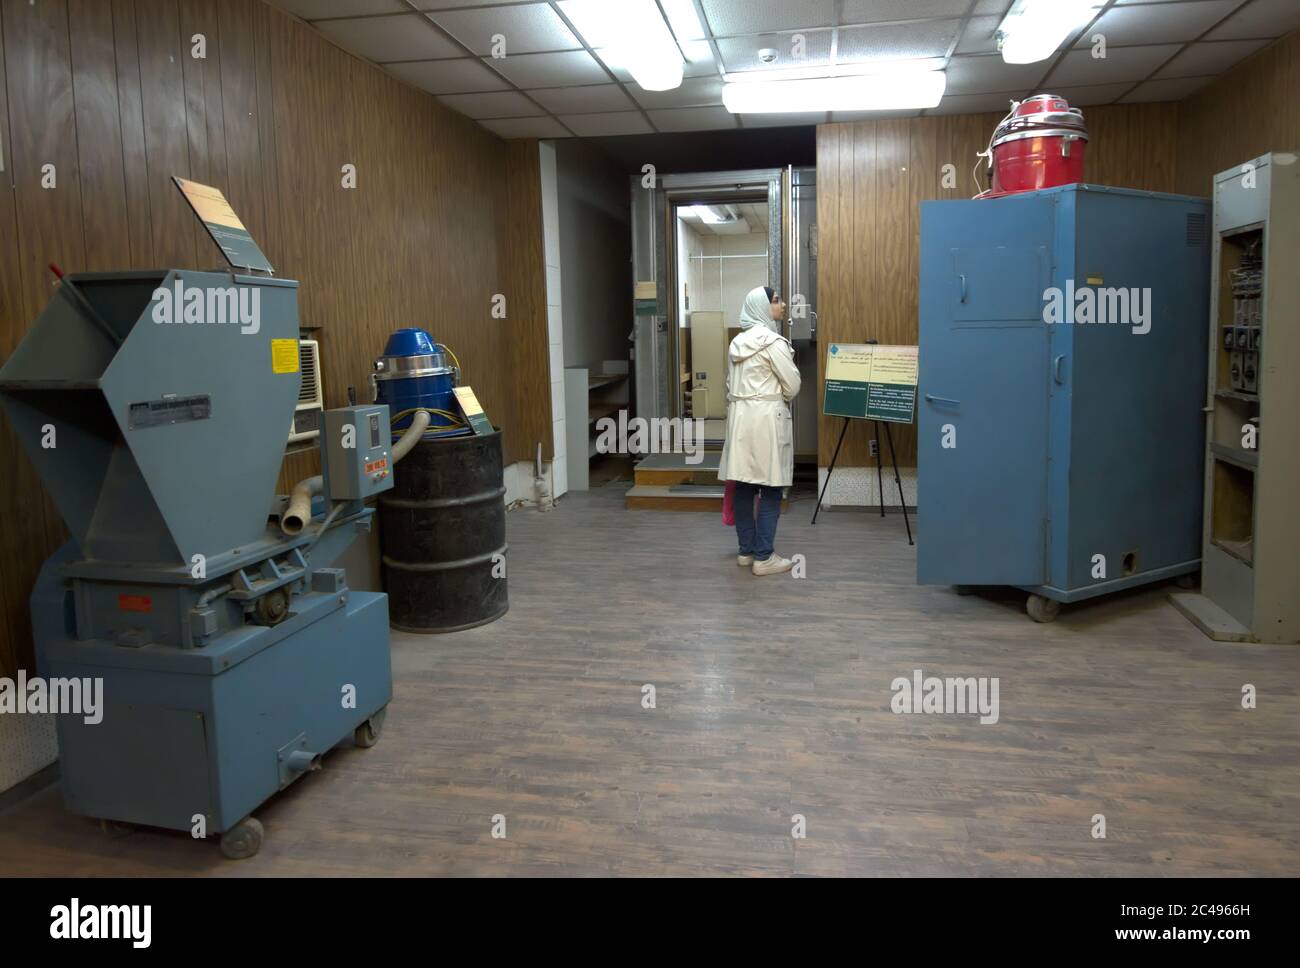 Old CIA shredder machines inside former US embassy in Tehran, Iran Stock Photo